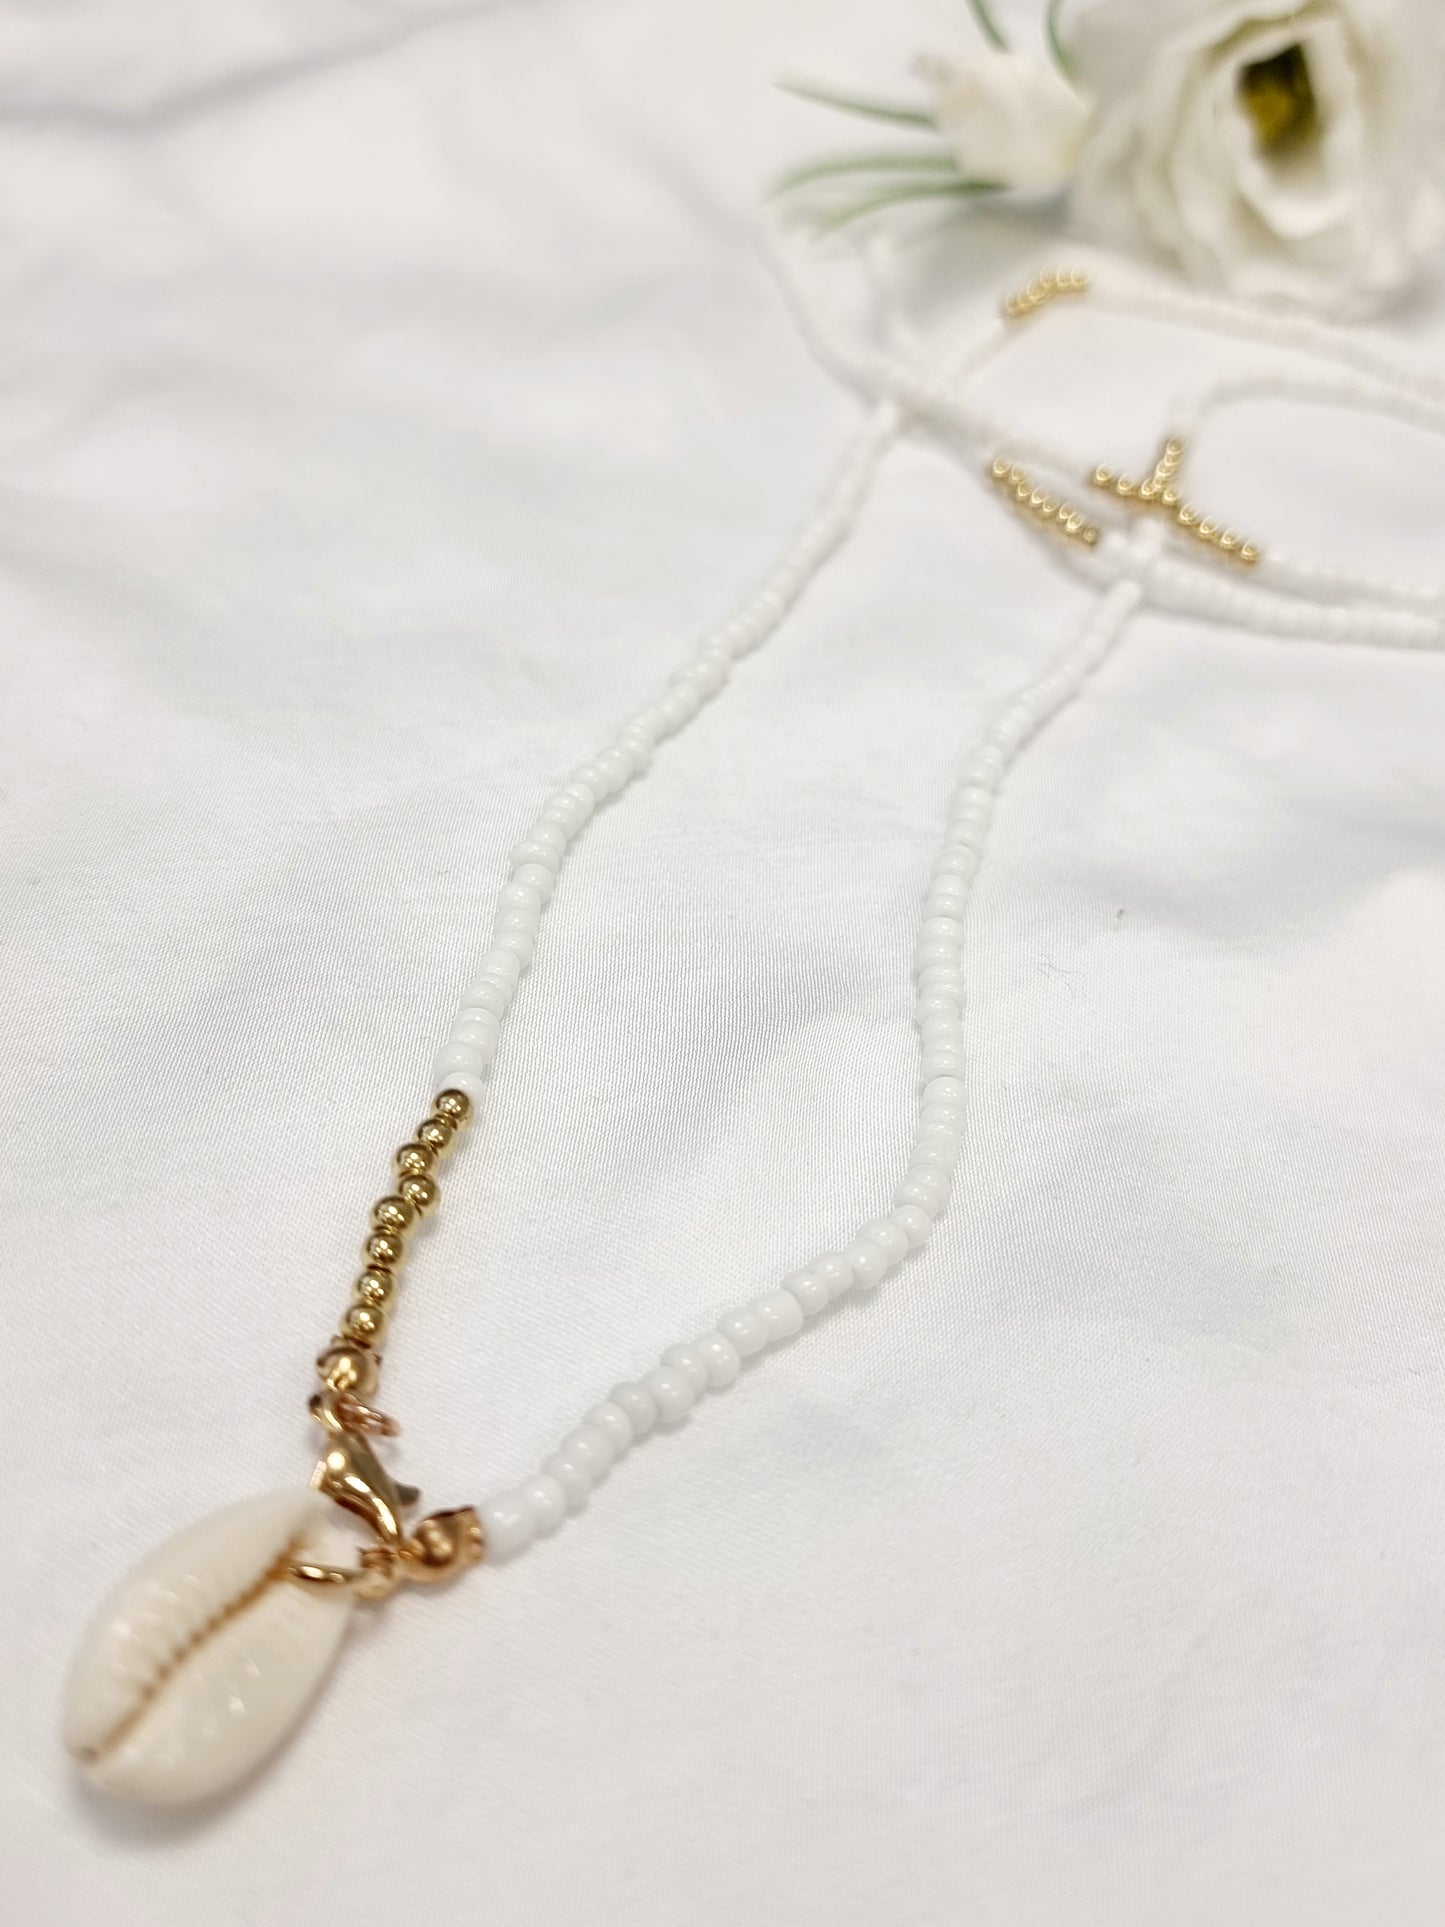 Lange weiss goldene Boho-Perlenkette mit Muschelanhänger